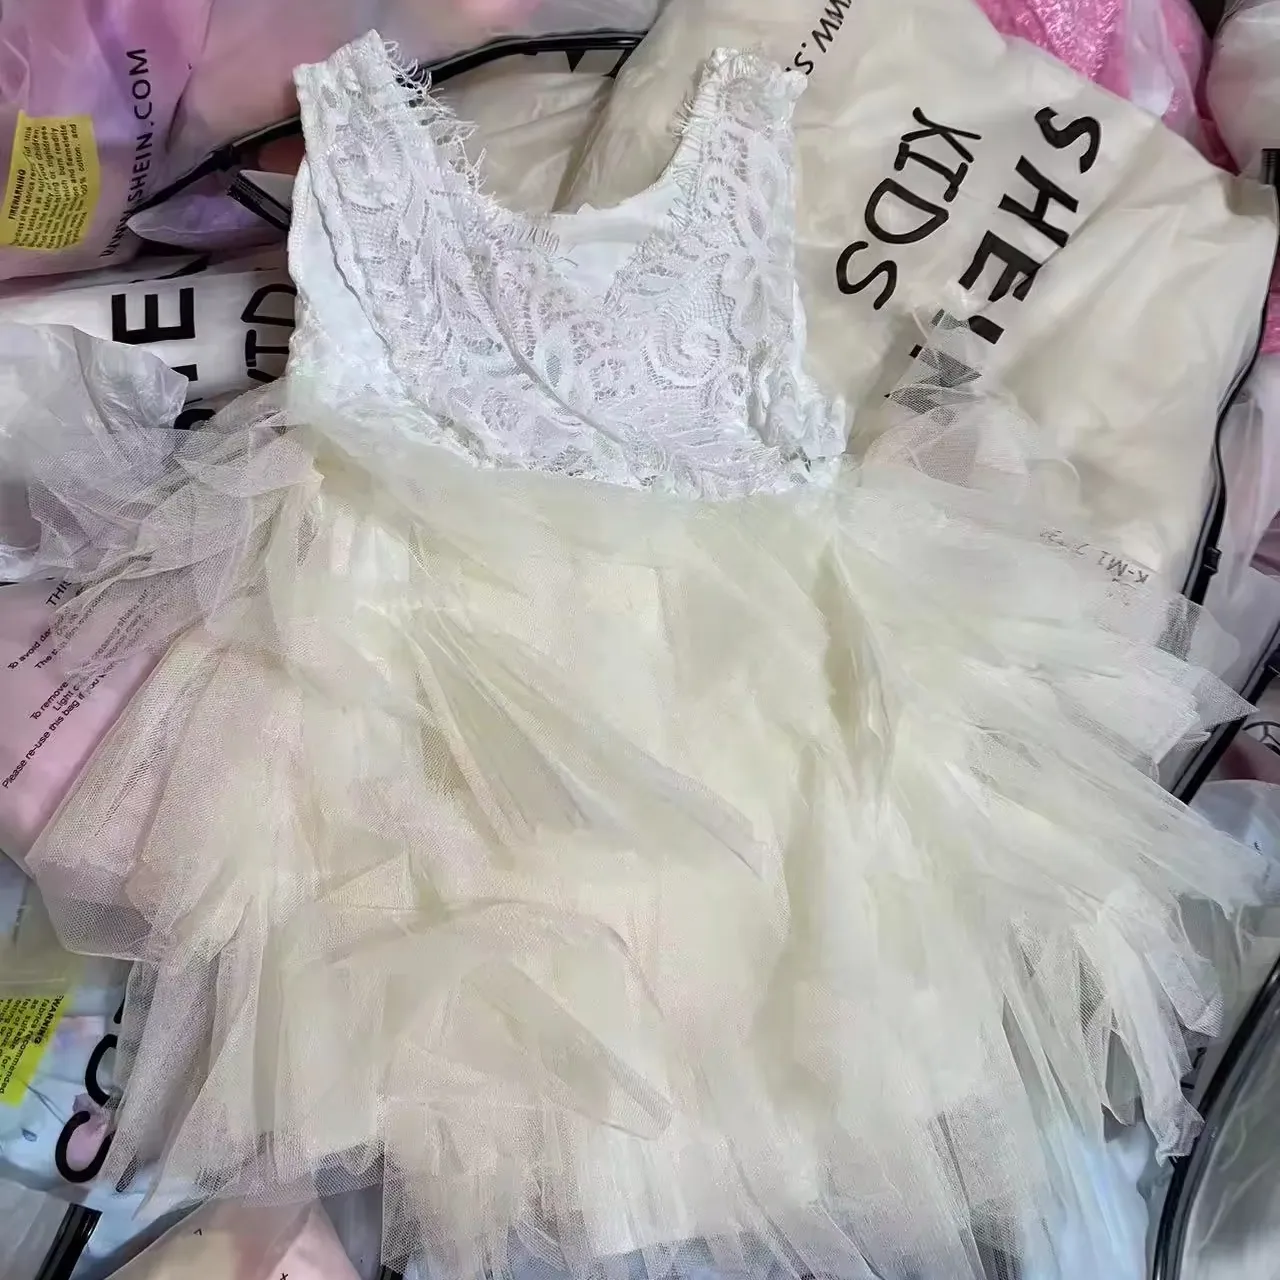 2022 Wholesale for Supplier Bulks Brand New Mix Assorted Dress Bulk Bales Clothes kids children apparel stock